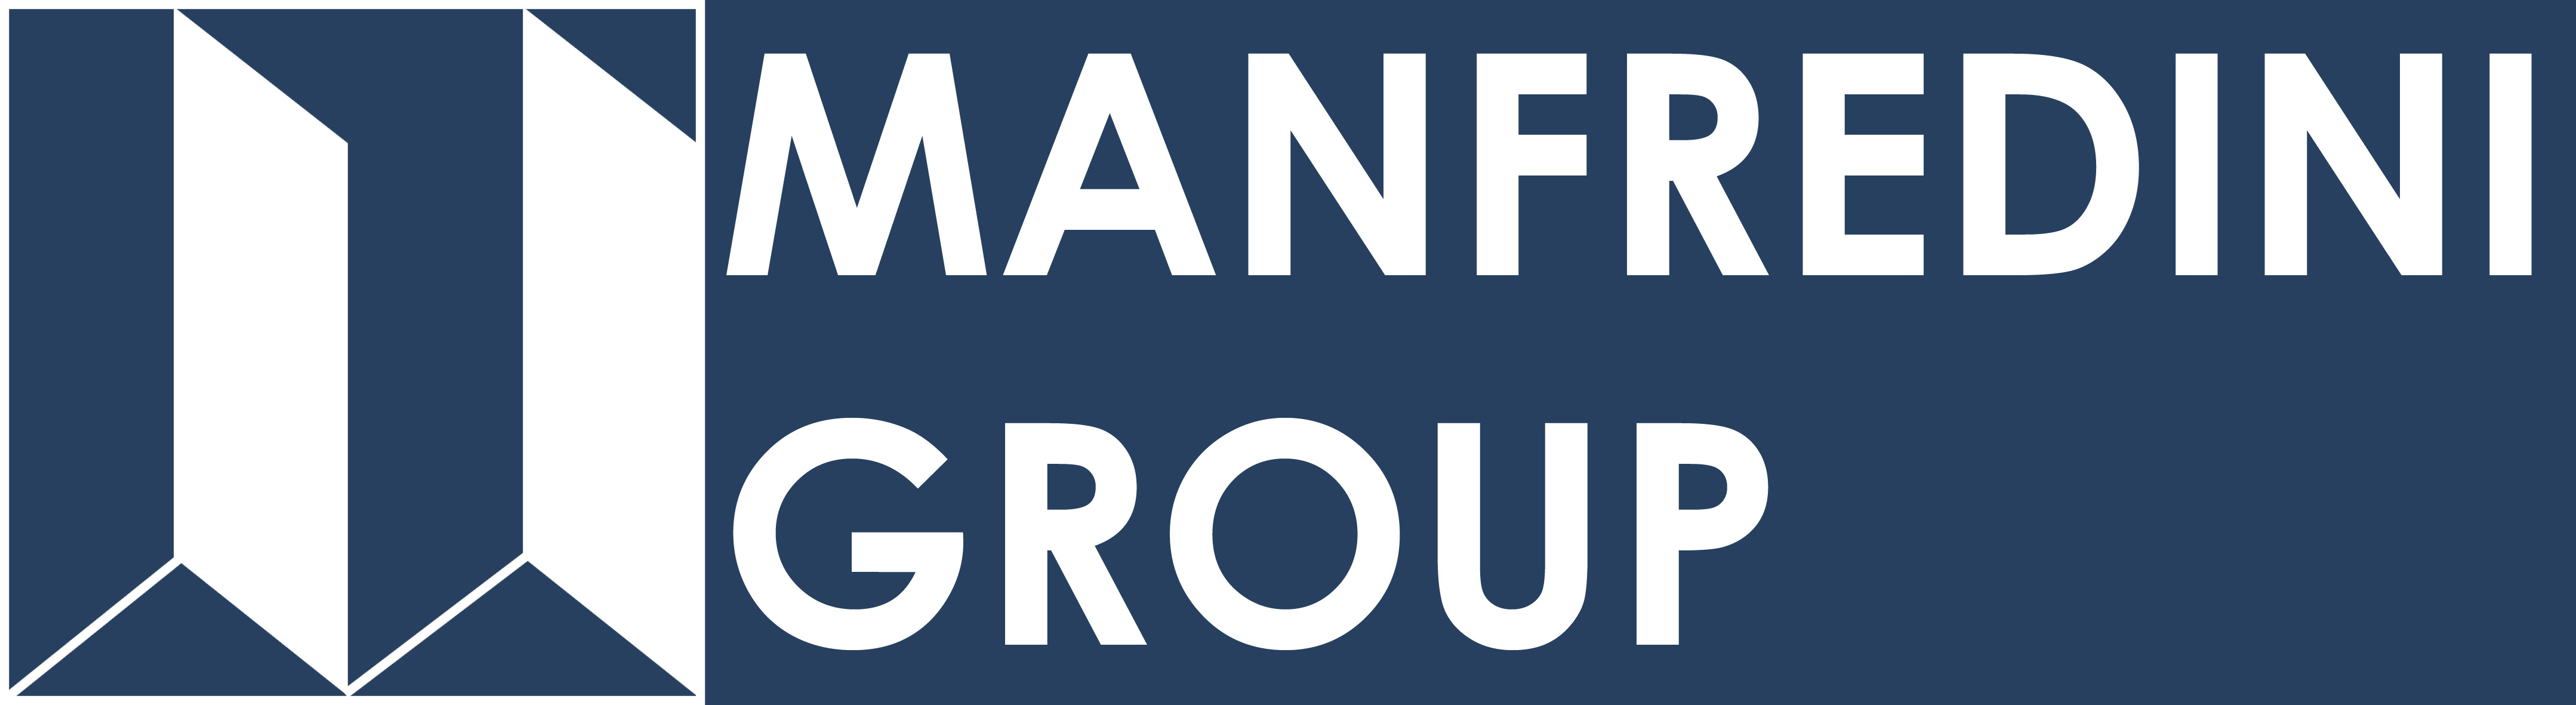 Manfredini Group